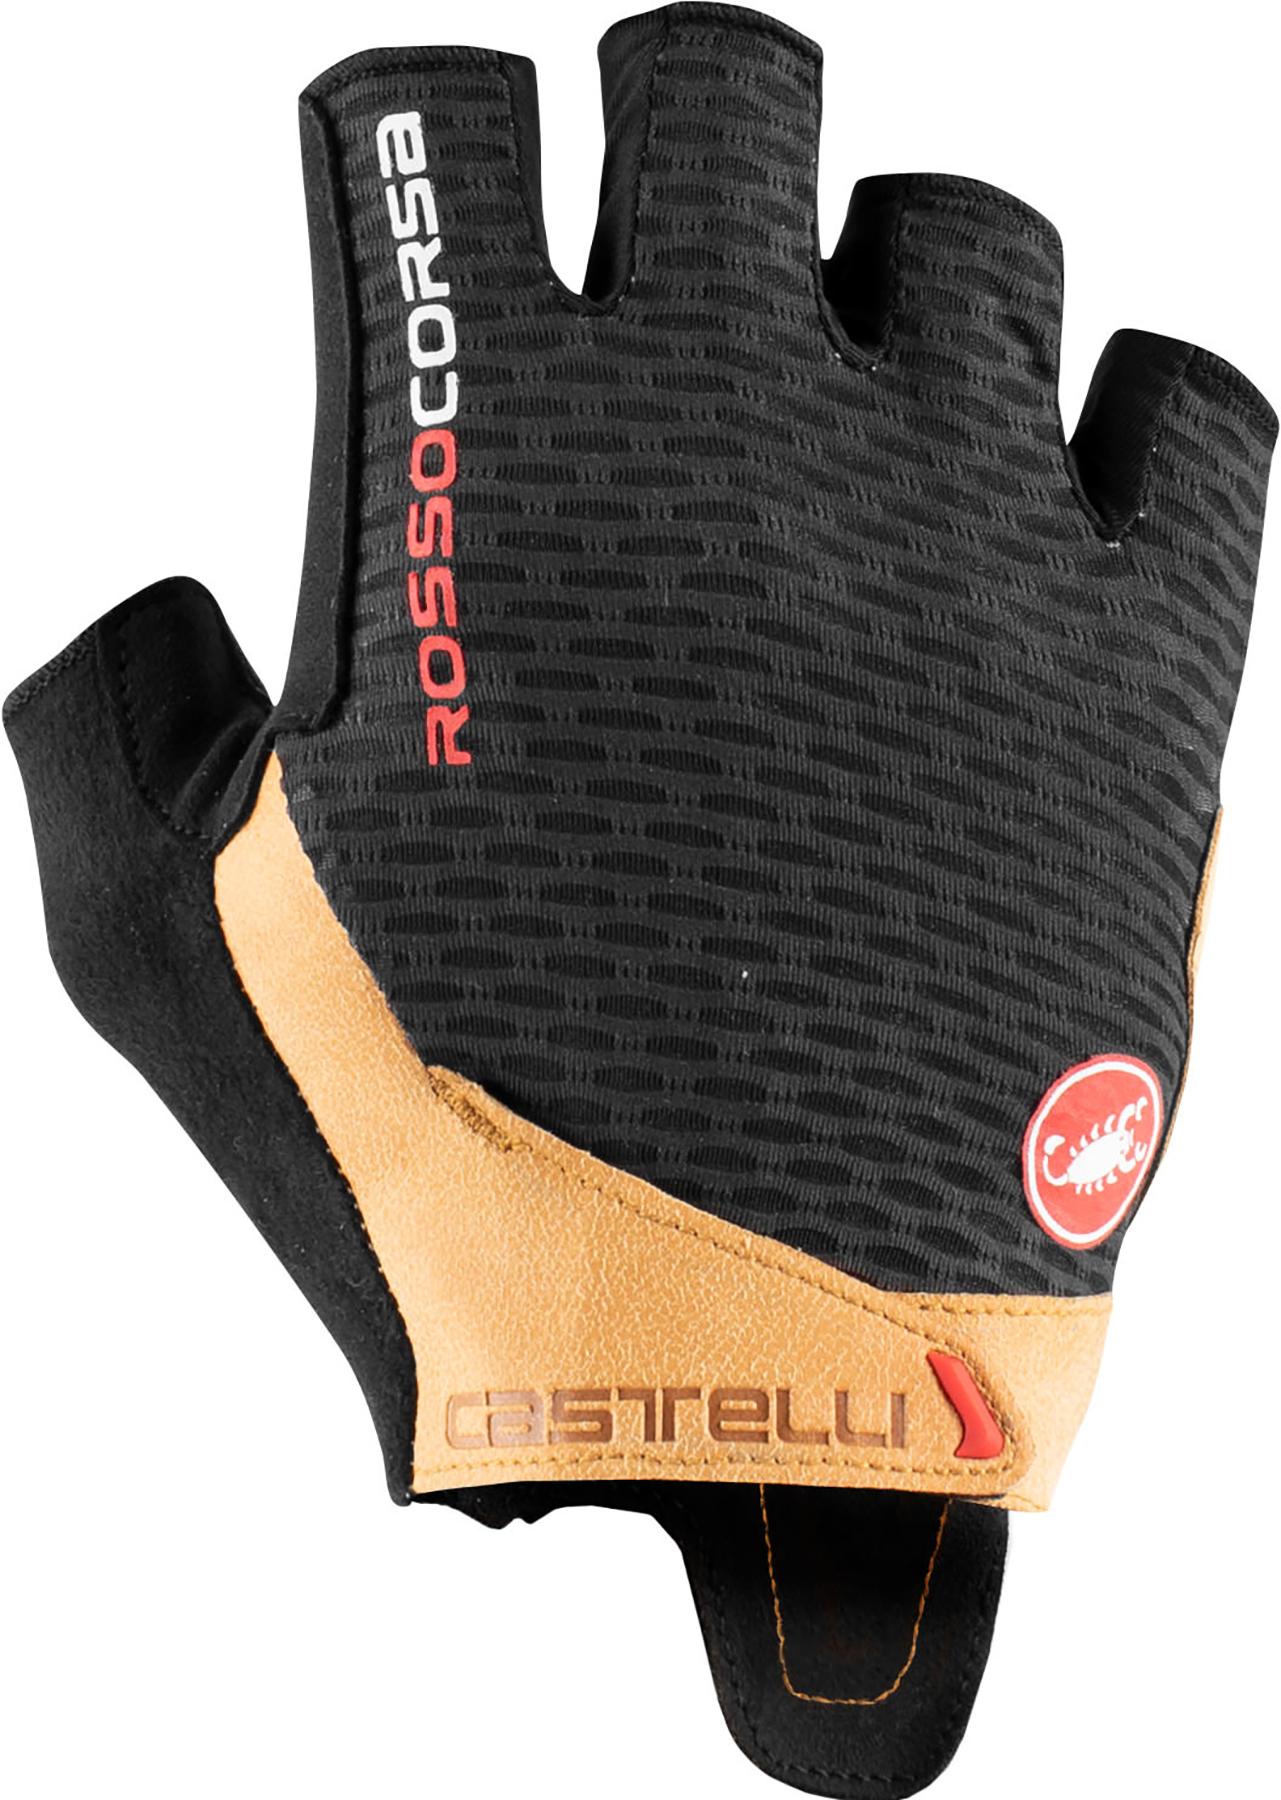 Castelli Rosso Corsa Pro V Cycling Gloves - Black/tan